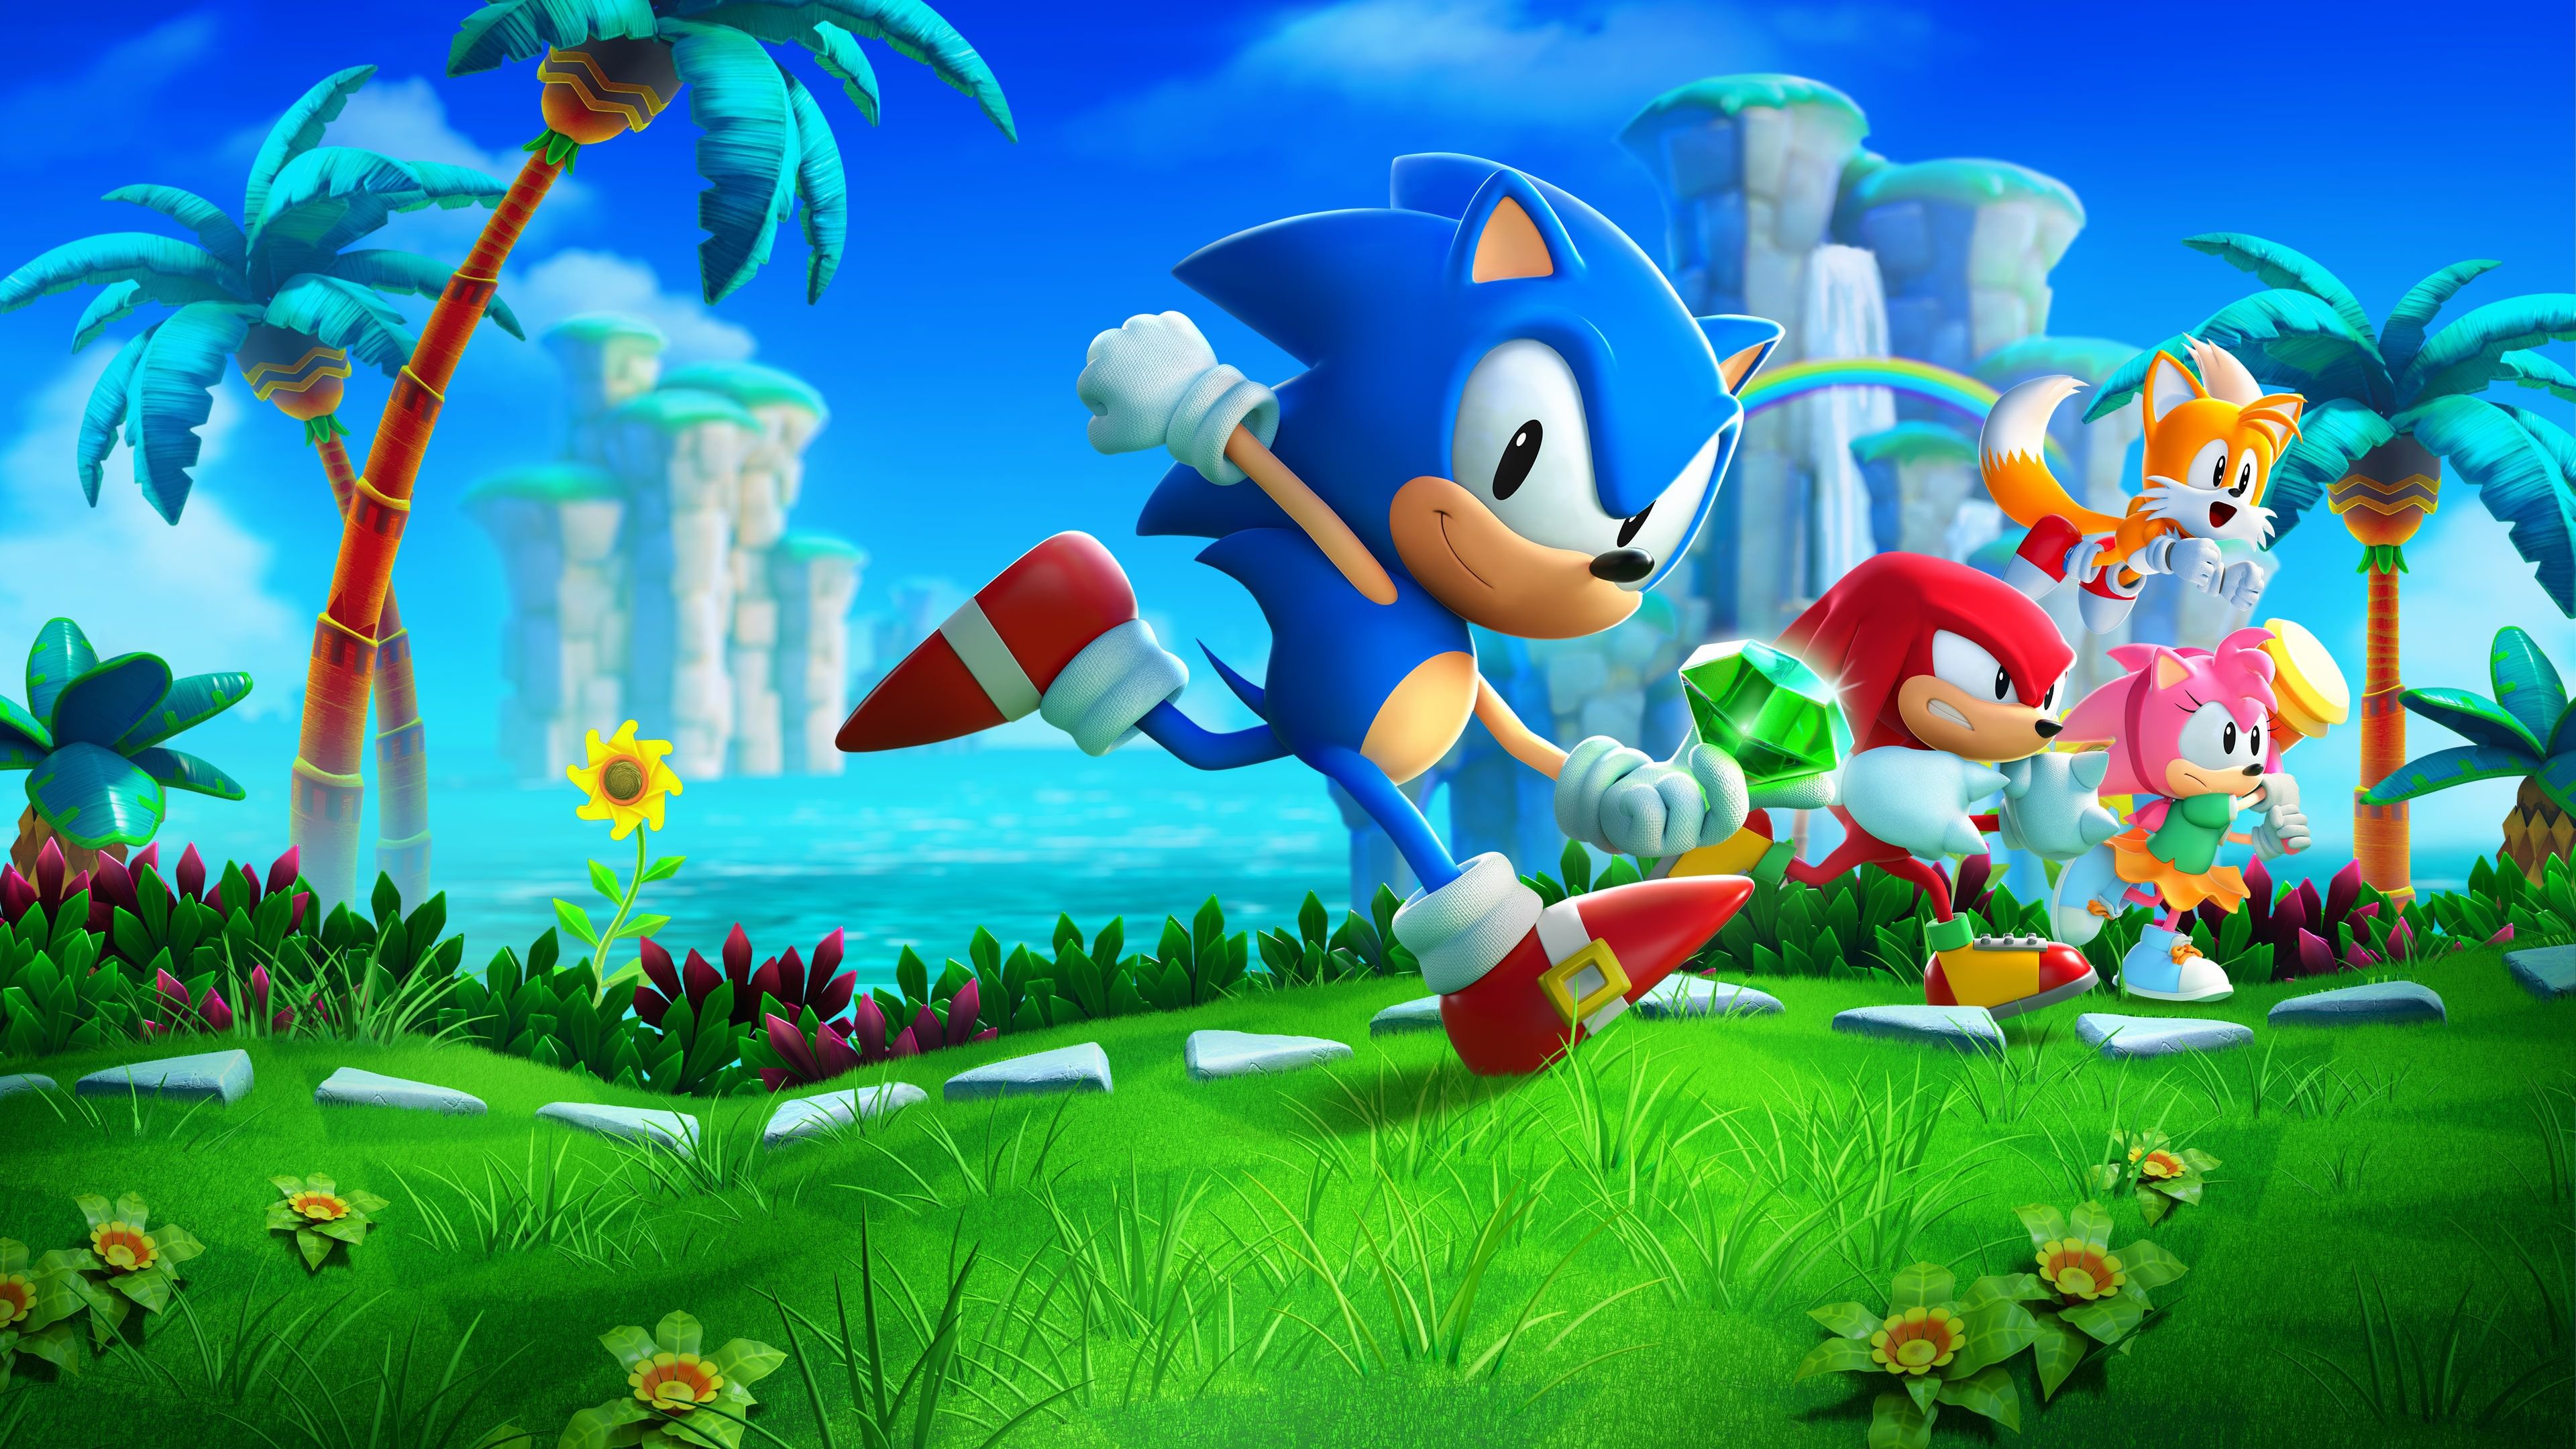 Jogue Sonic 3 gratuitamente sem downloads